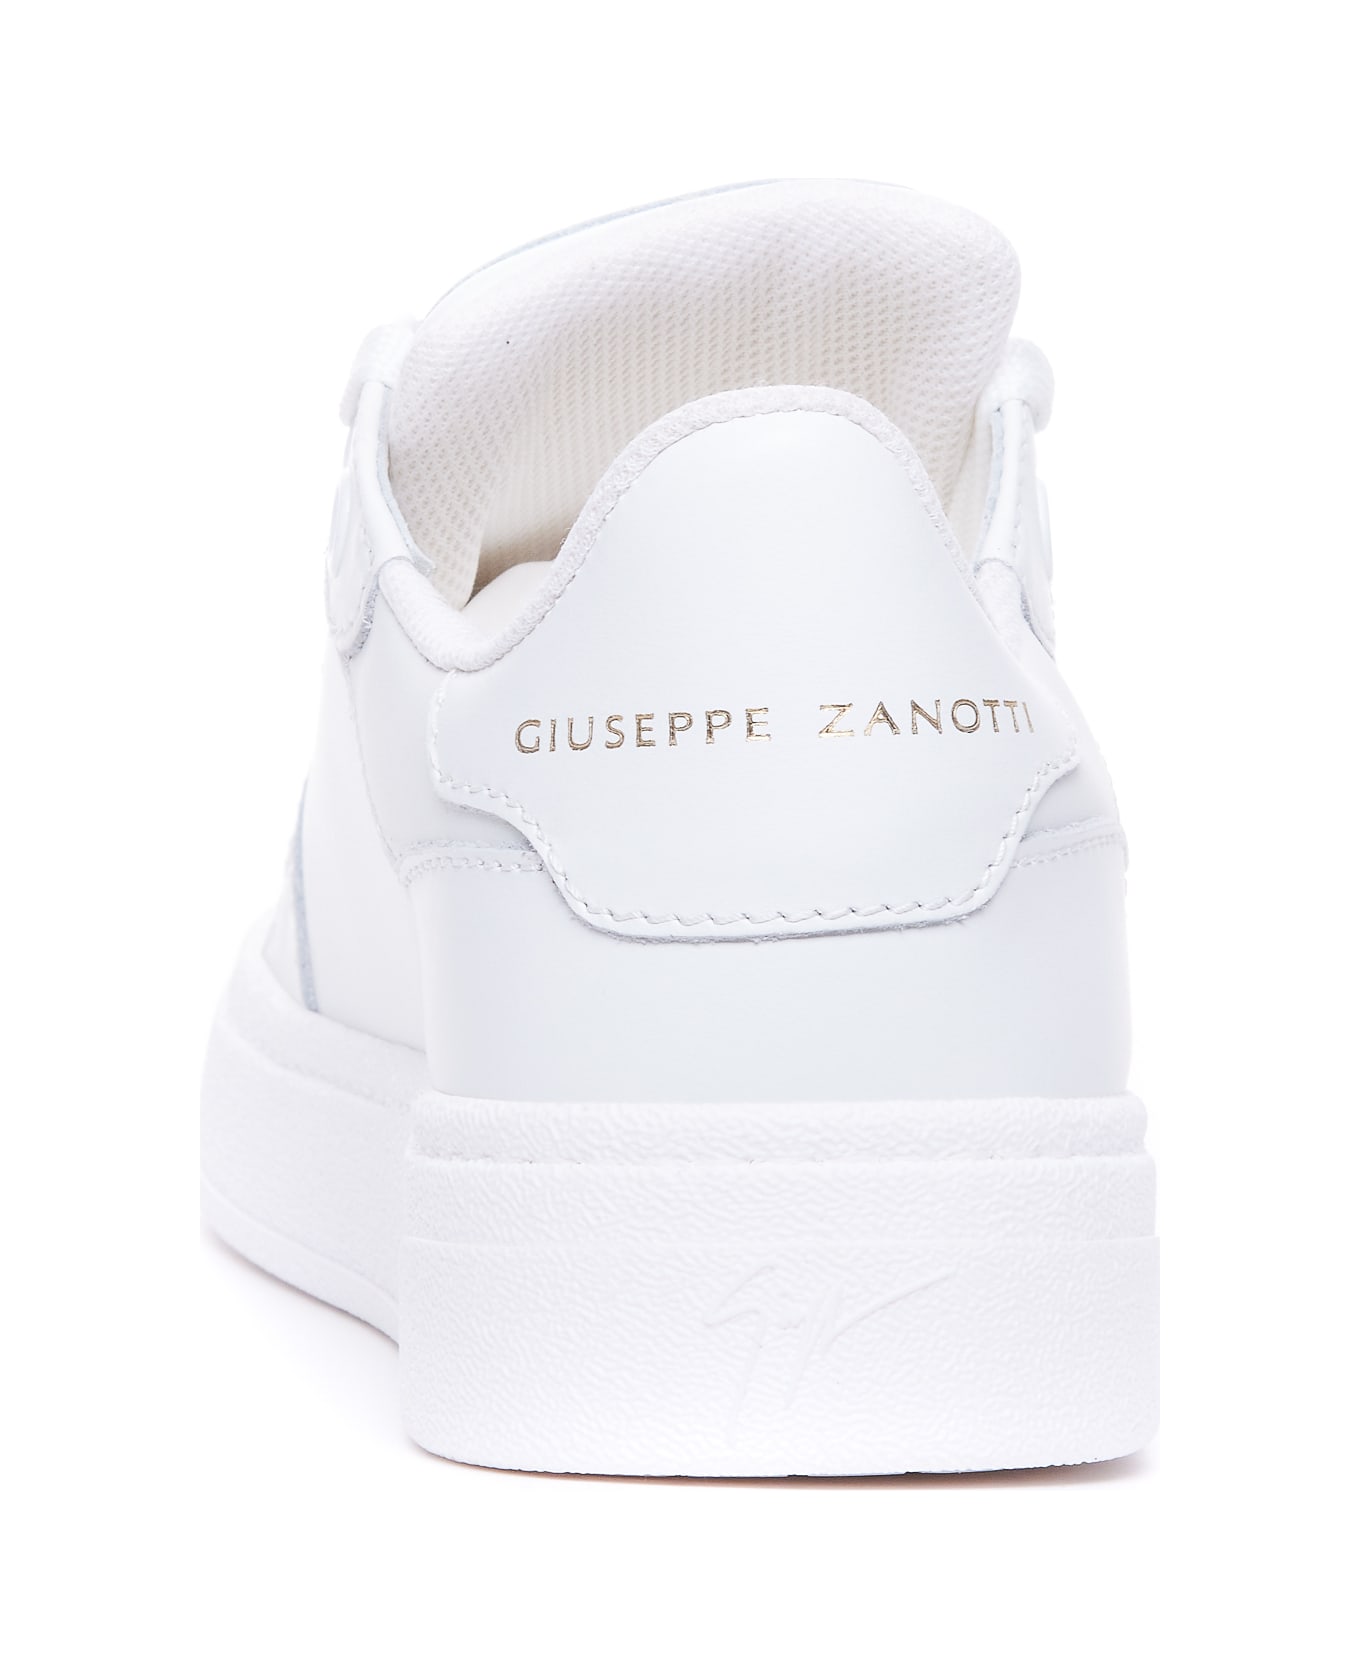 Giuseppe Zanotti Gr94 Sneakers - White